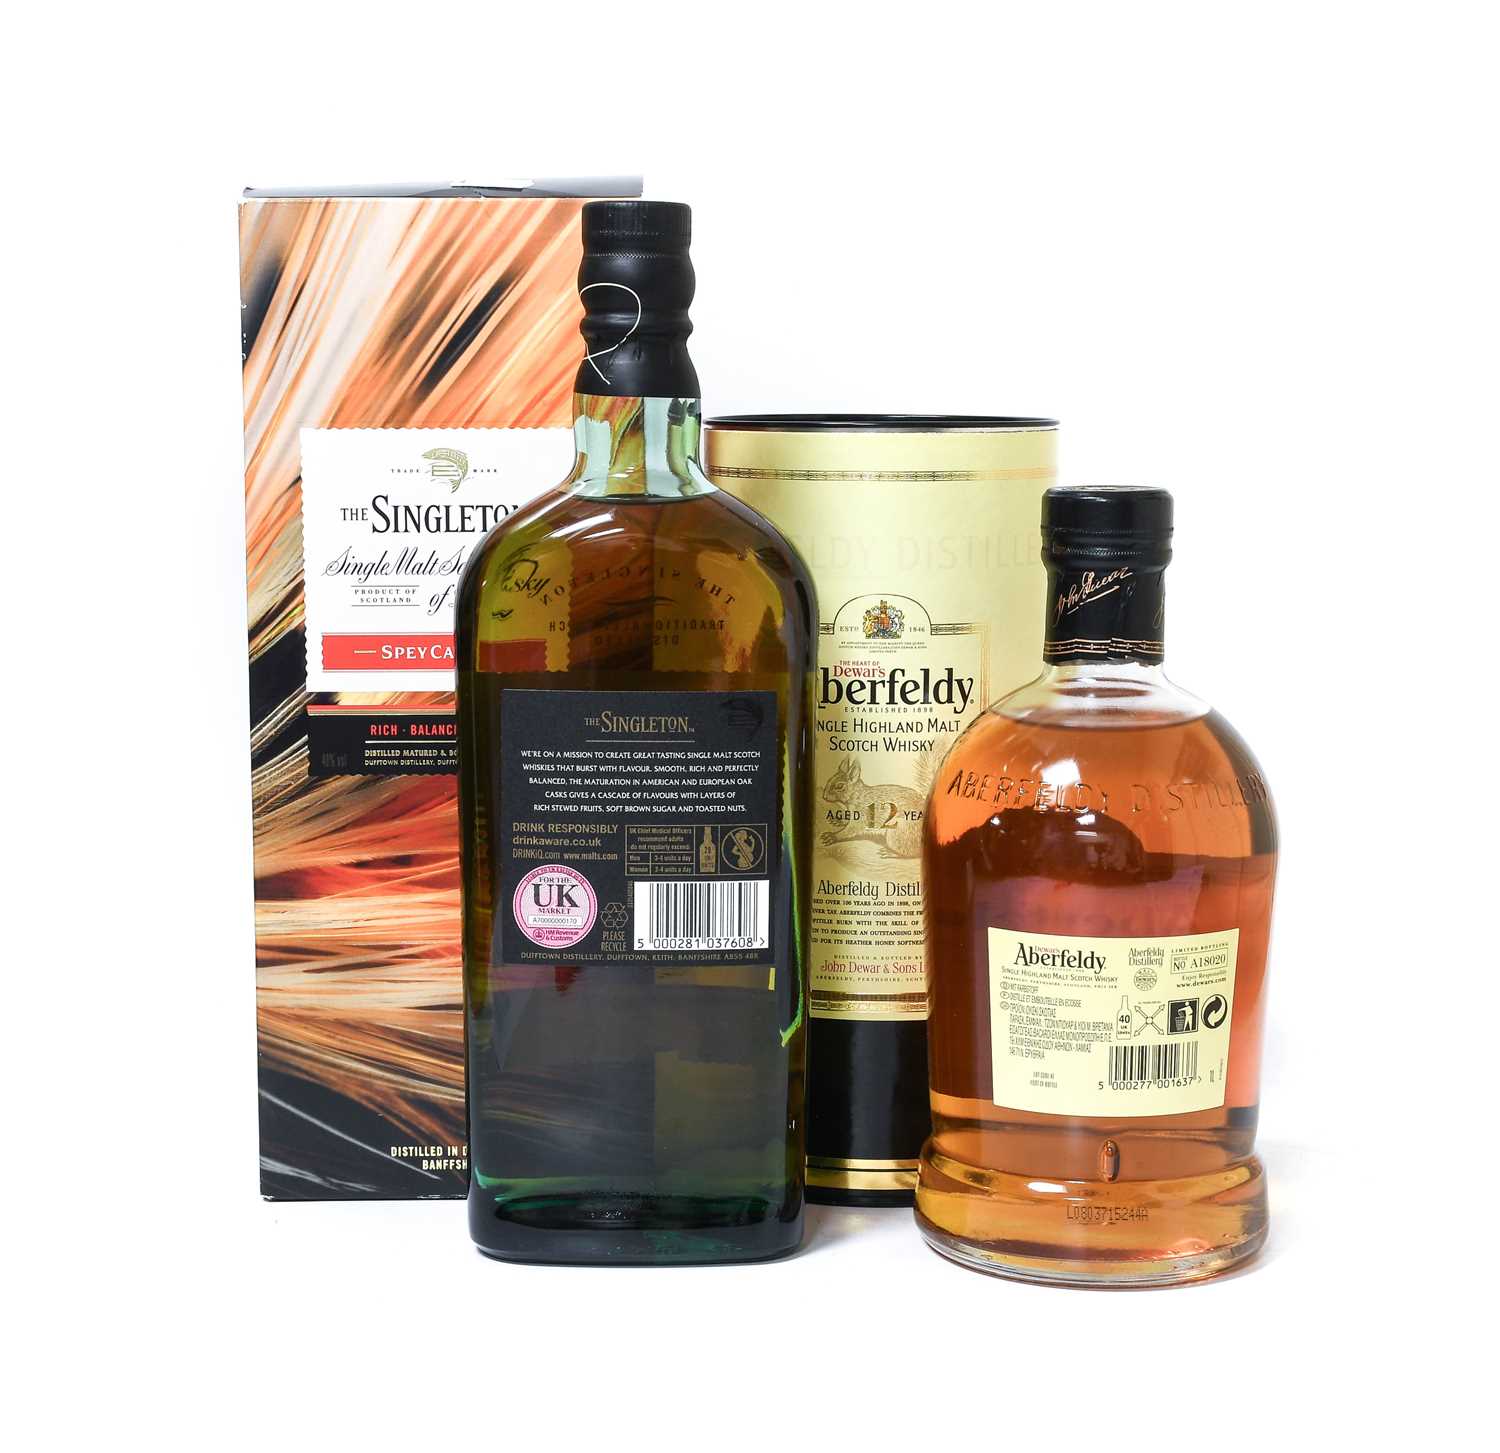 Singleton Spey Cascade Single Malt Scotch Whisky, 40% vol 70cl (one bottle), Aberfeldy 12 Year Old - Image 2 of 2